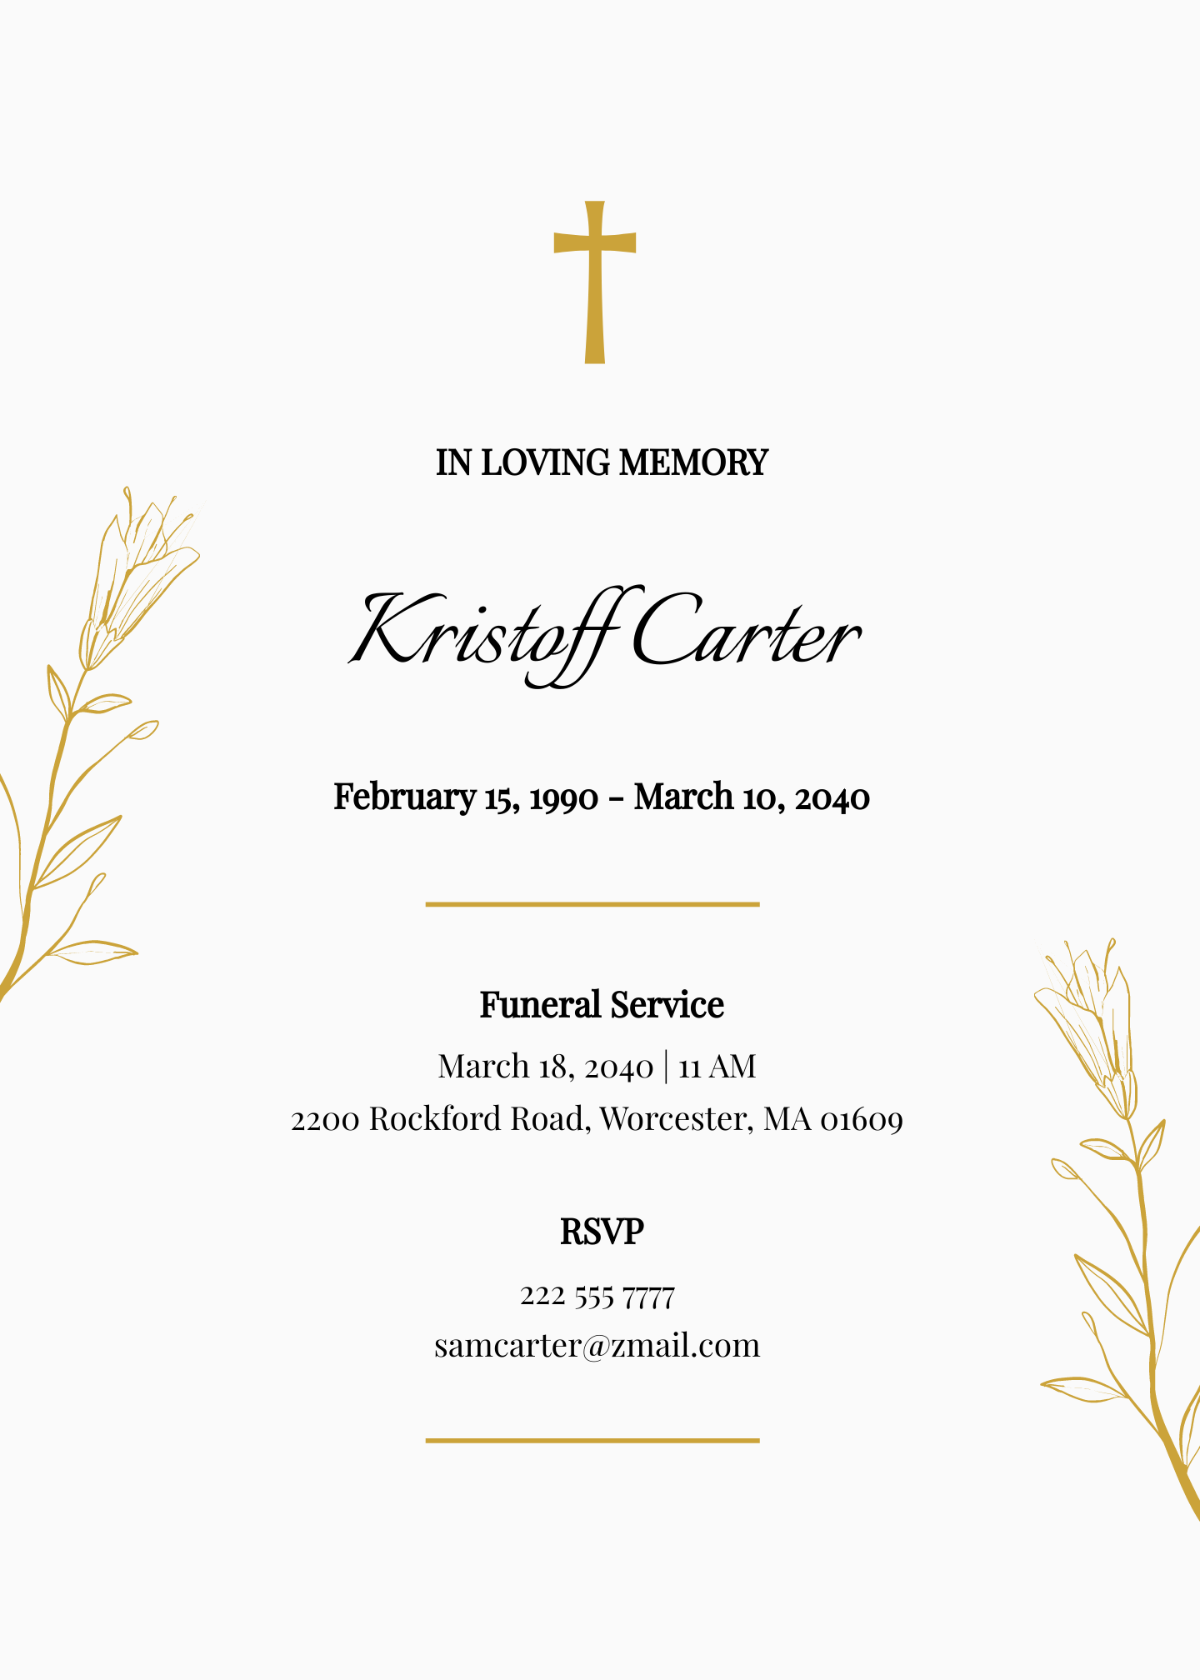 Digital Funeral Announcement Card Template